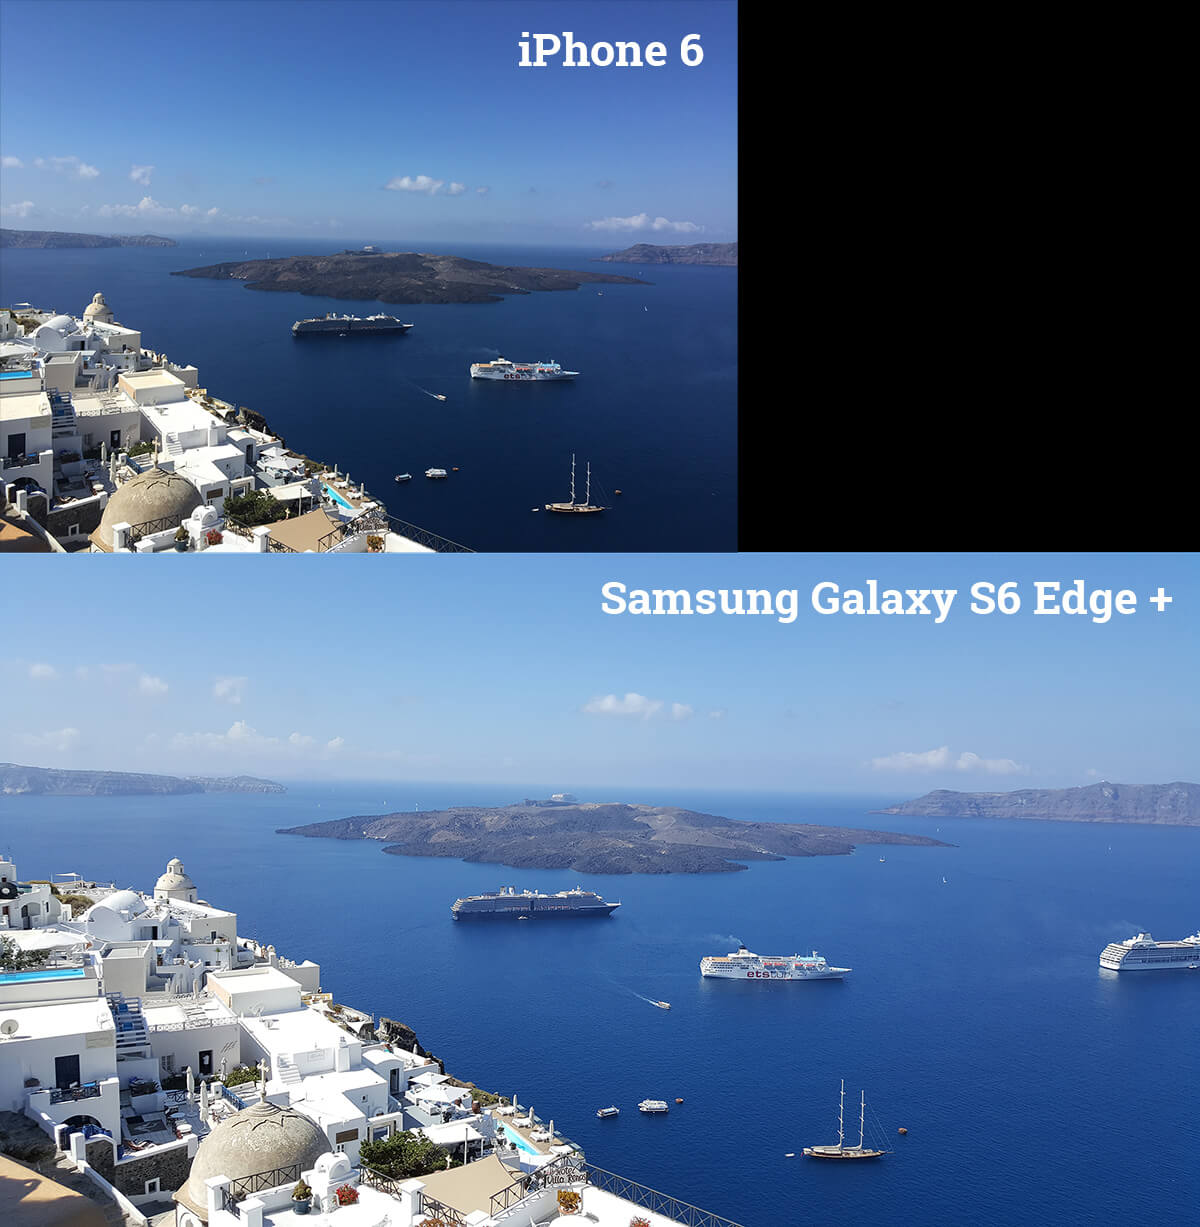 Samsung_iPhone_Santorini_SMALL